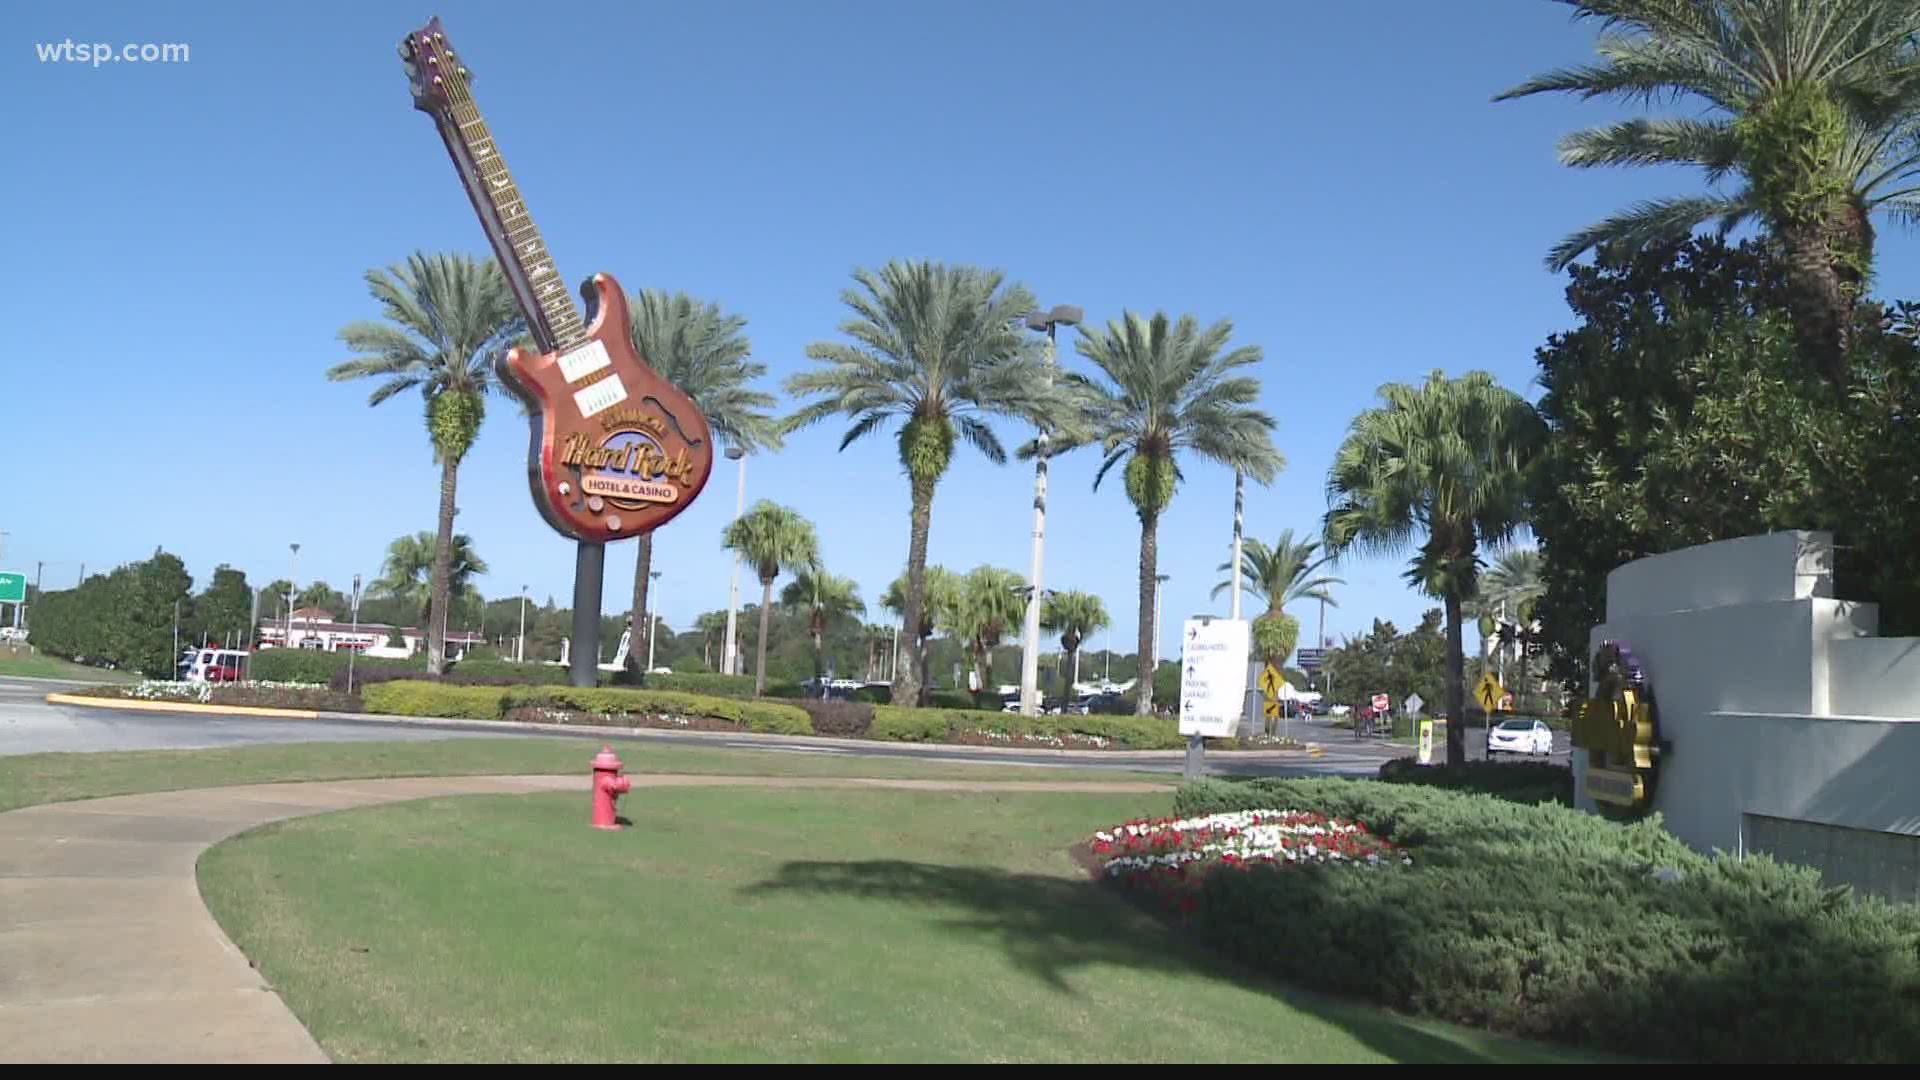 Seminole Hard Rock Hotel & Casino - Tampa in Tampa